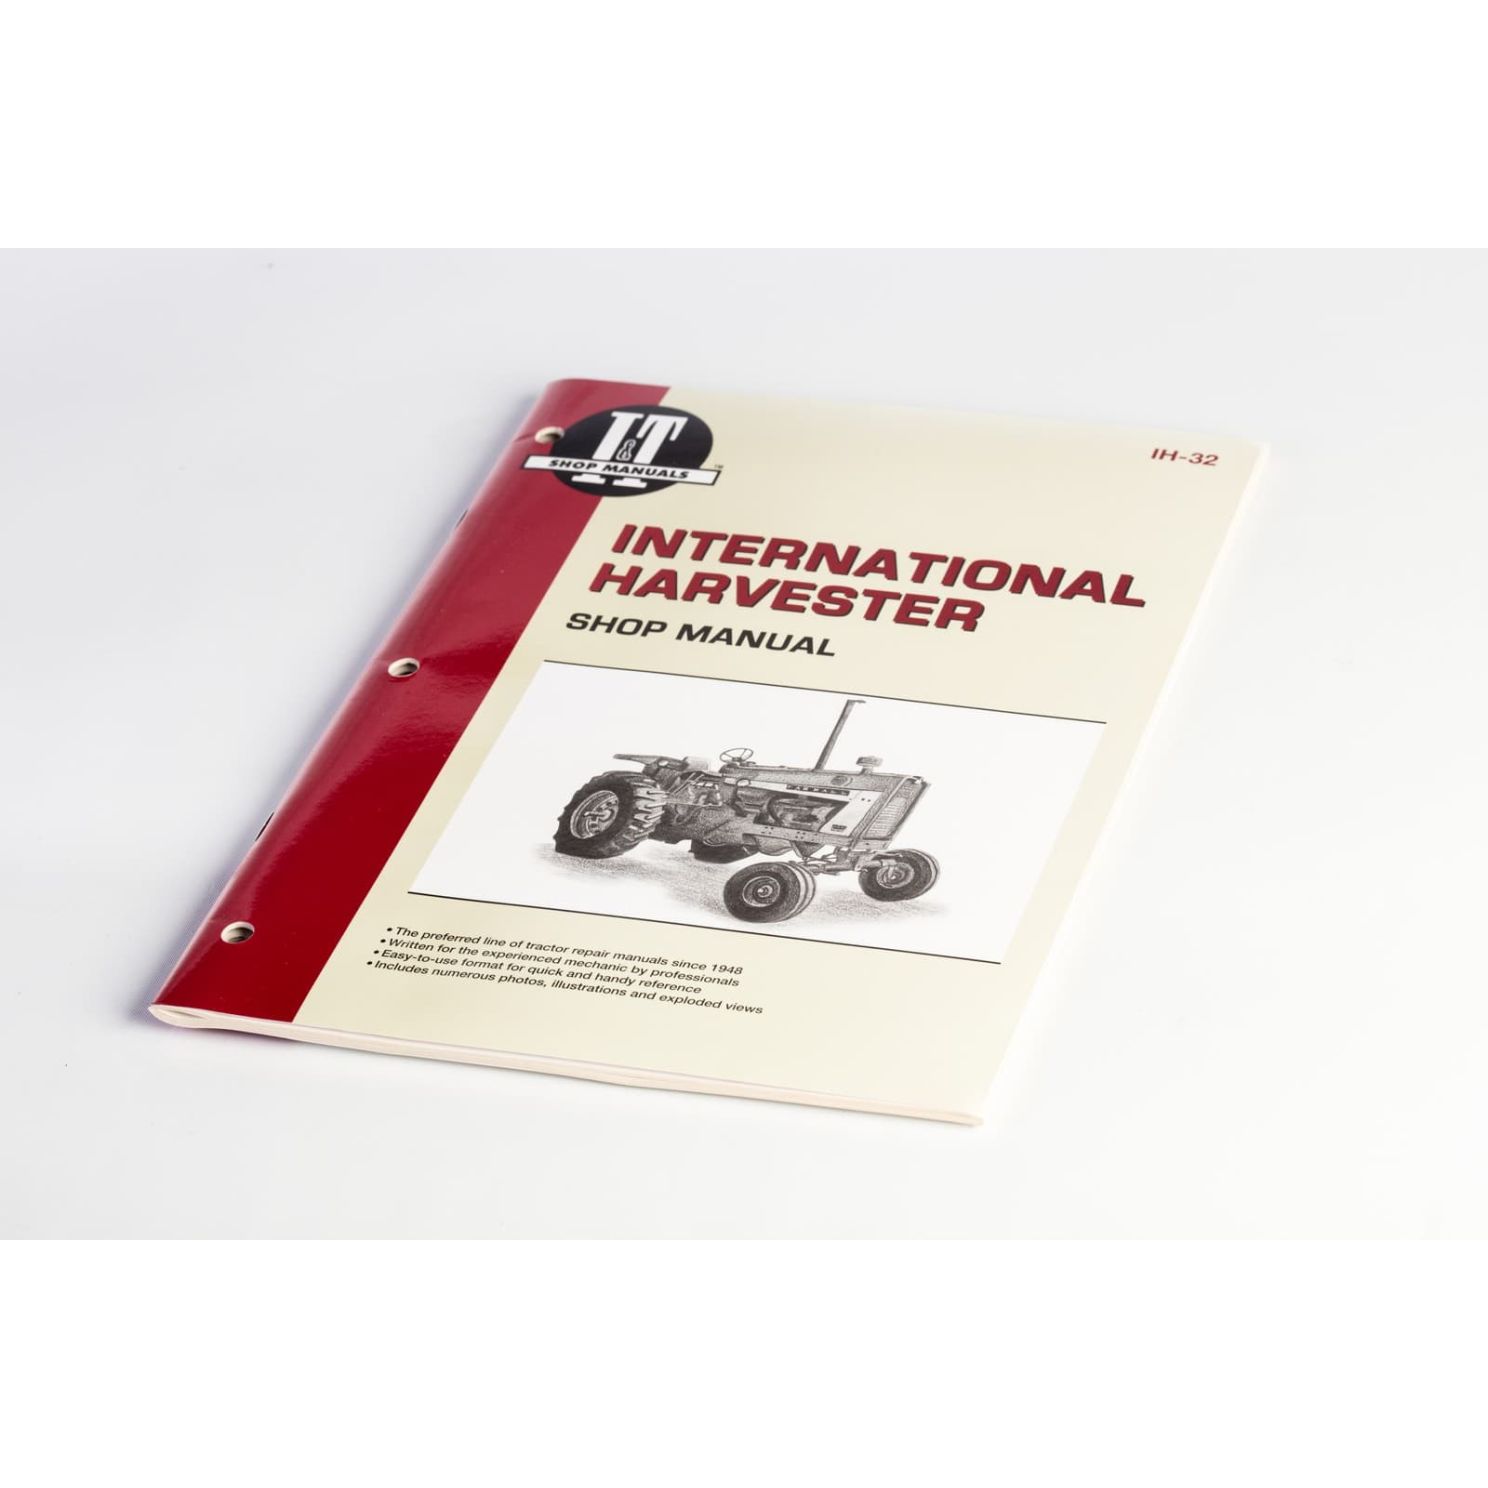 R1435 Shop Manual for International